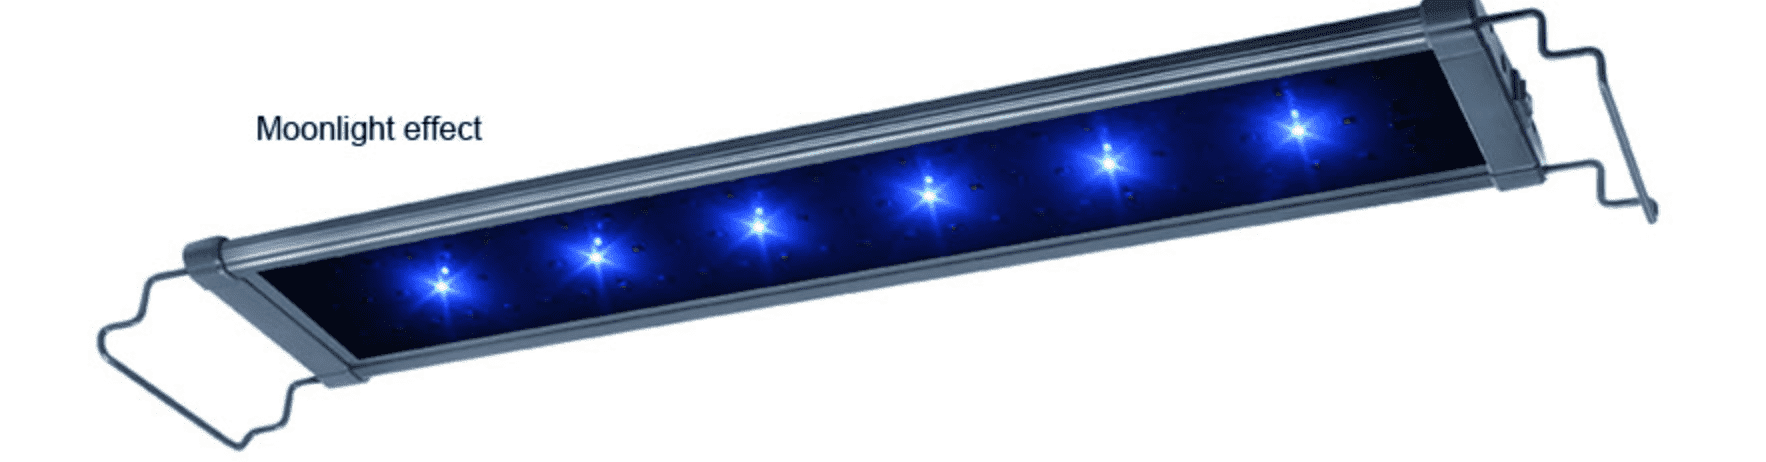 Spectra Aqua Classic 120 Cms Fresh Water LED Lighting